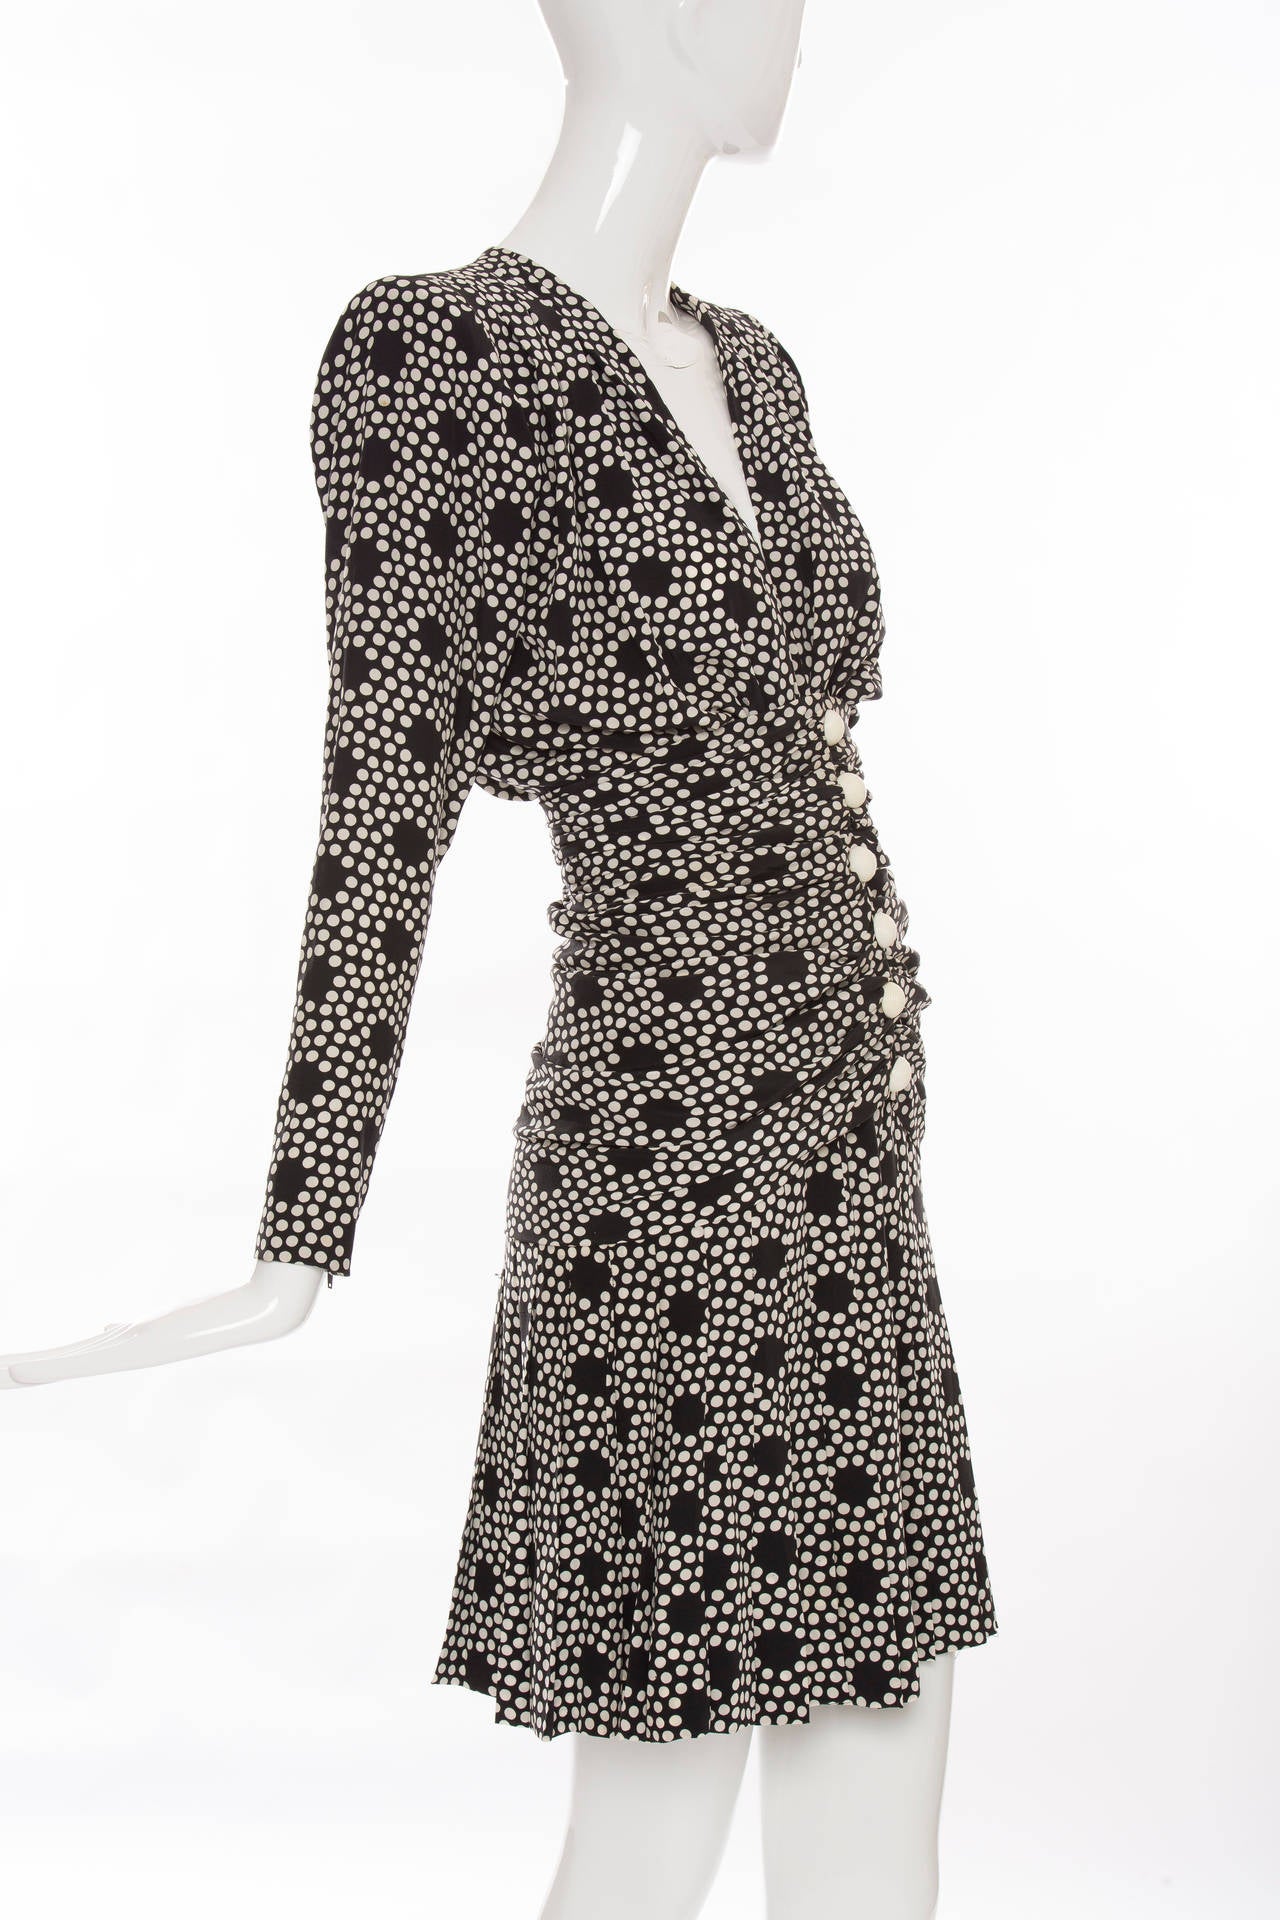 Black Givenchy Haute Couture Skirt Suit, Circa 1980s